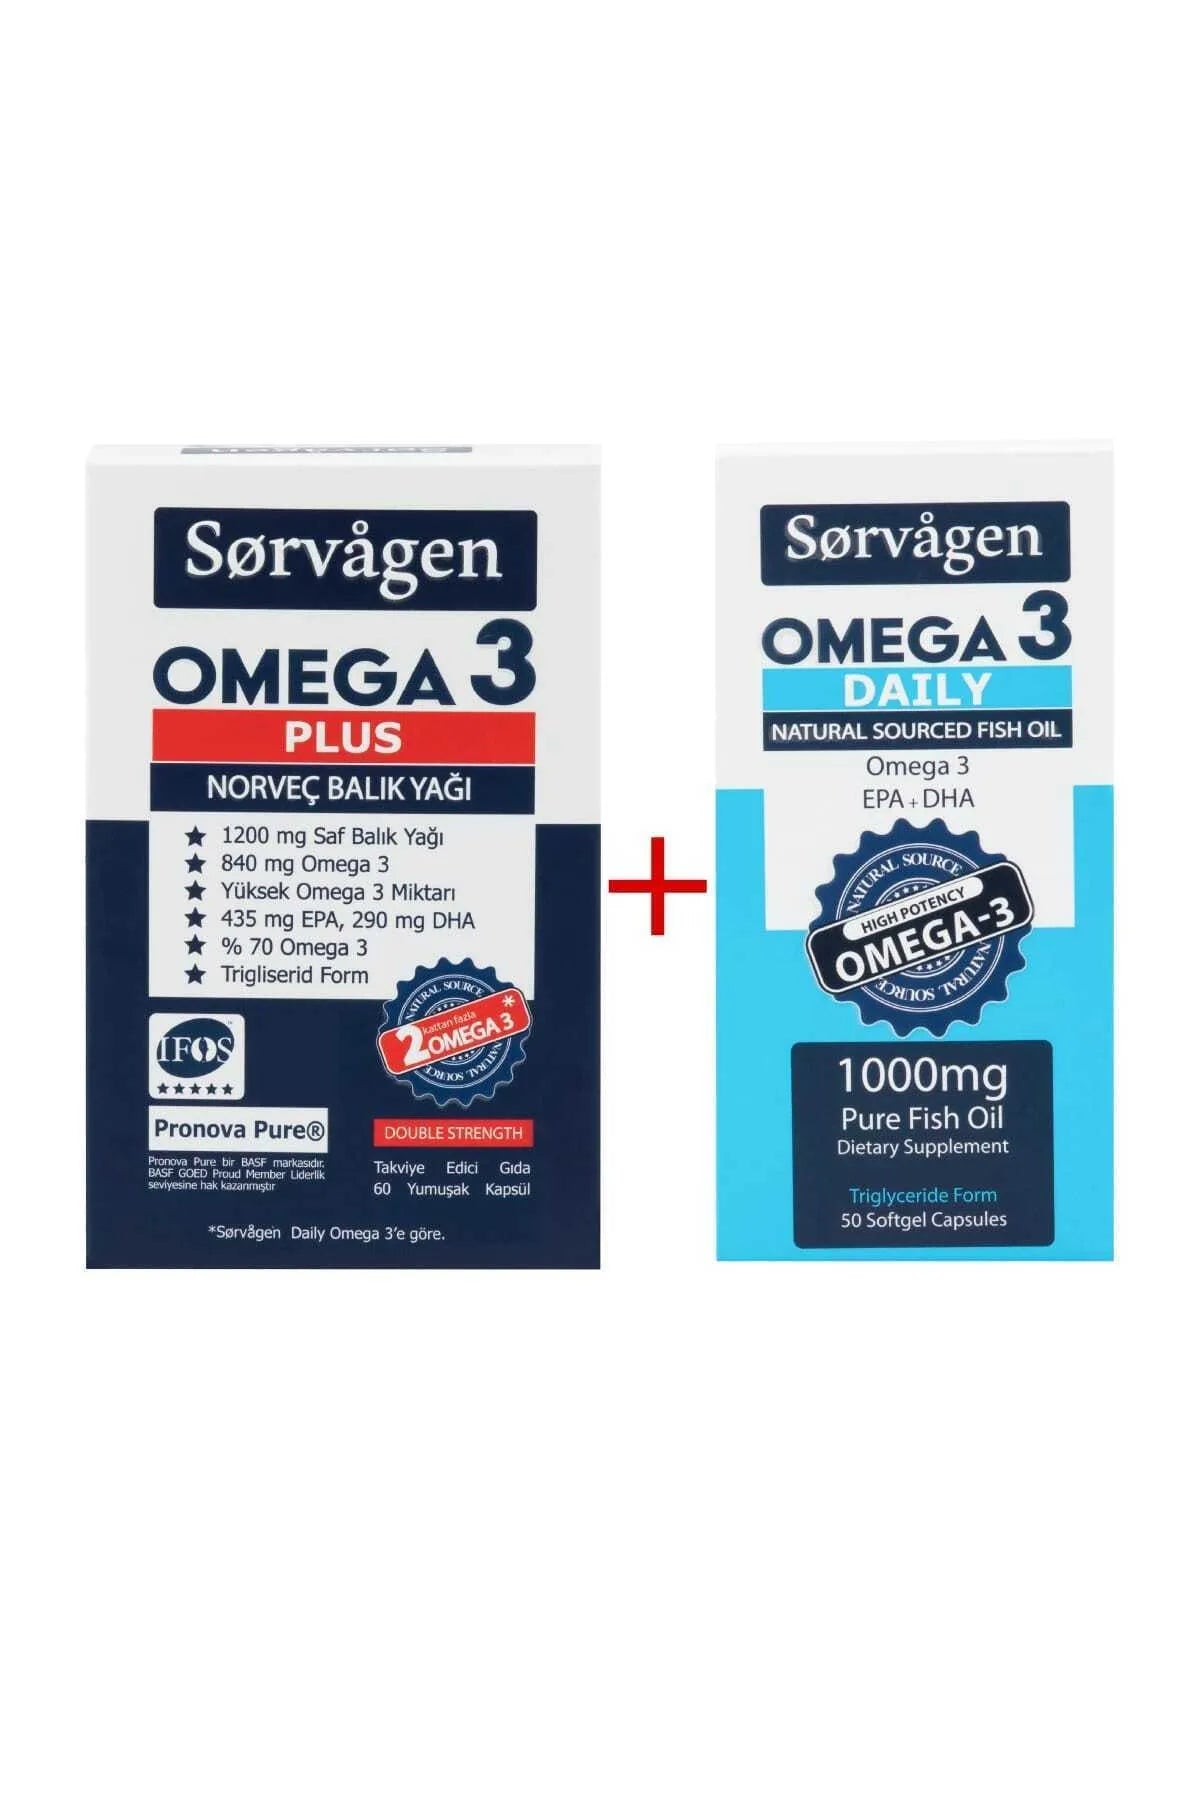 Sorvagen Omega 3 Plus 1200 Mg Yağı 60 Kapsül & Omega 3 Daily 1000 Mg Balık Yağı 50 Kapsül